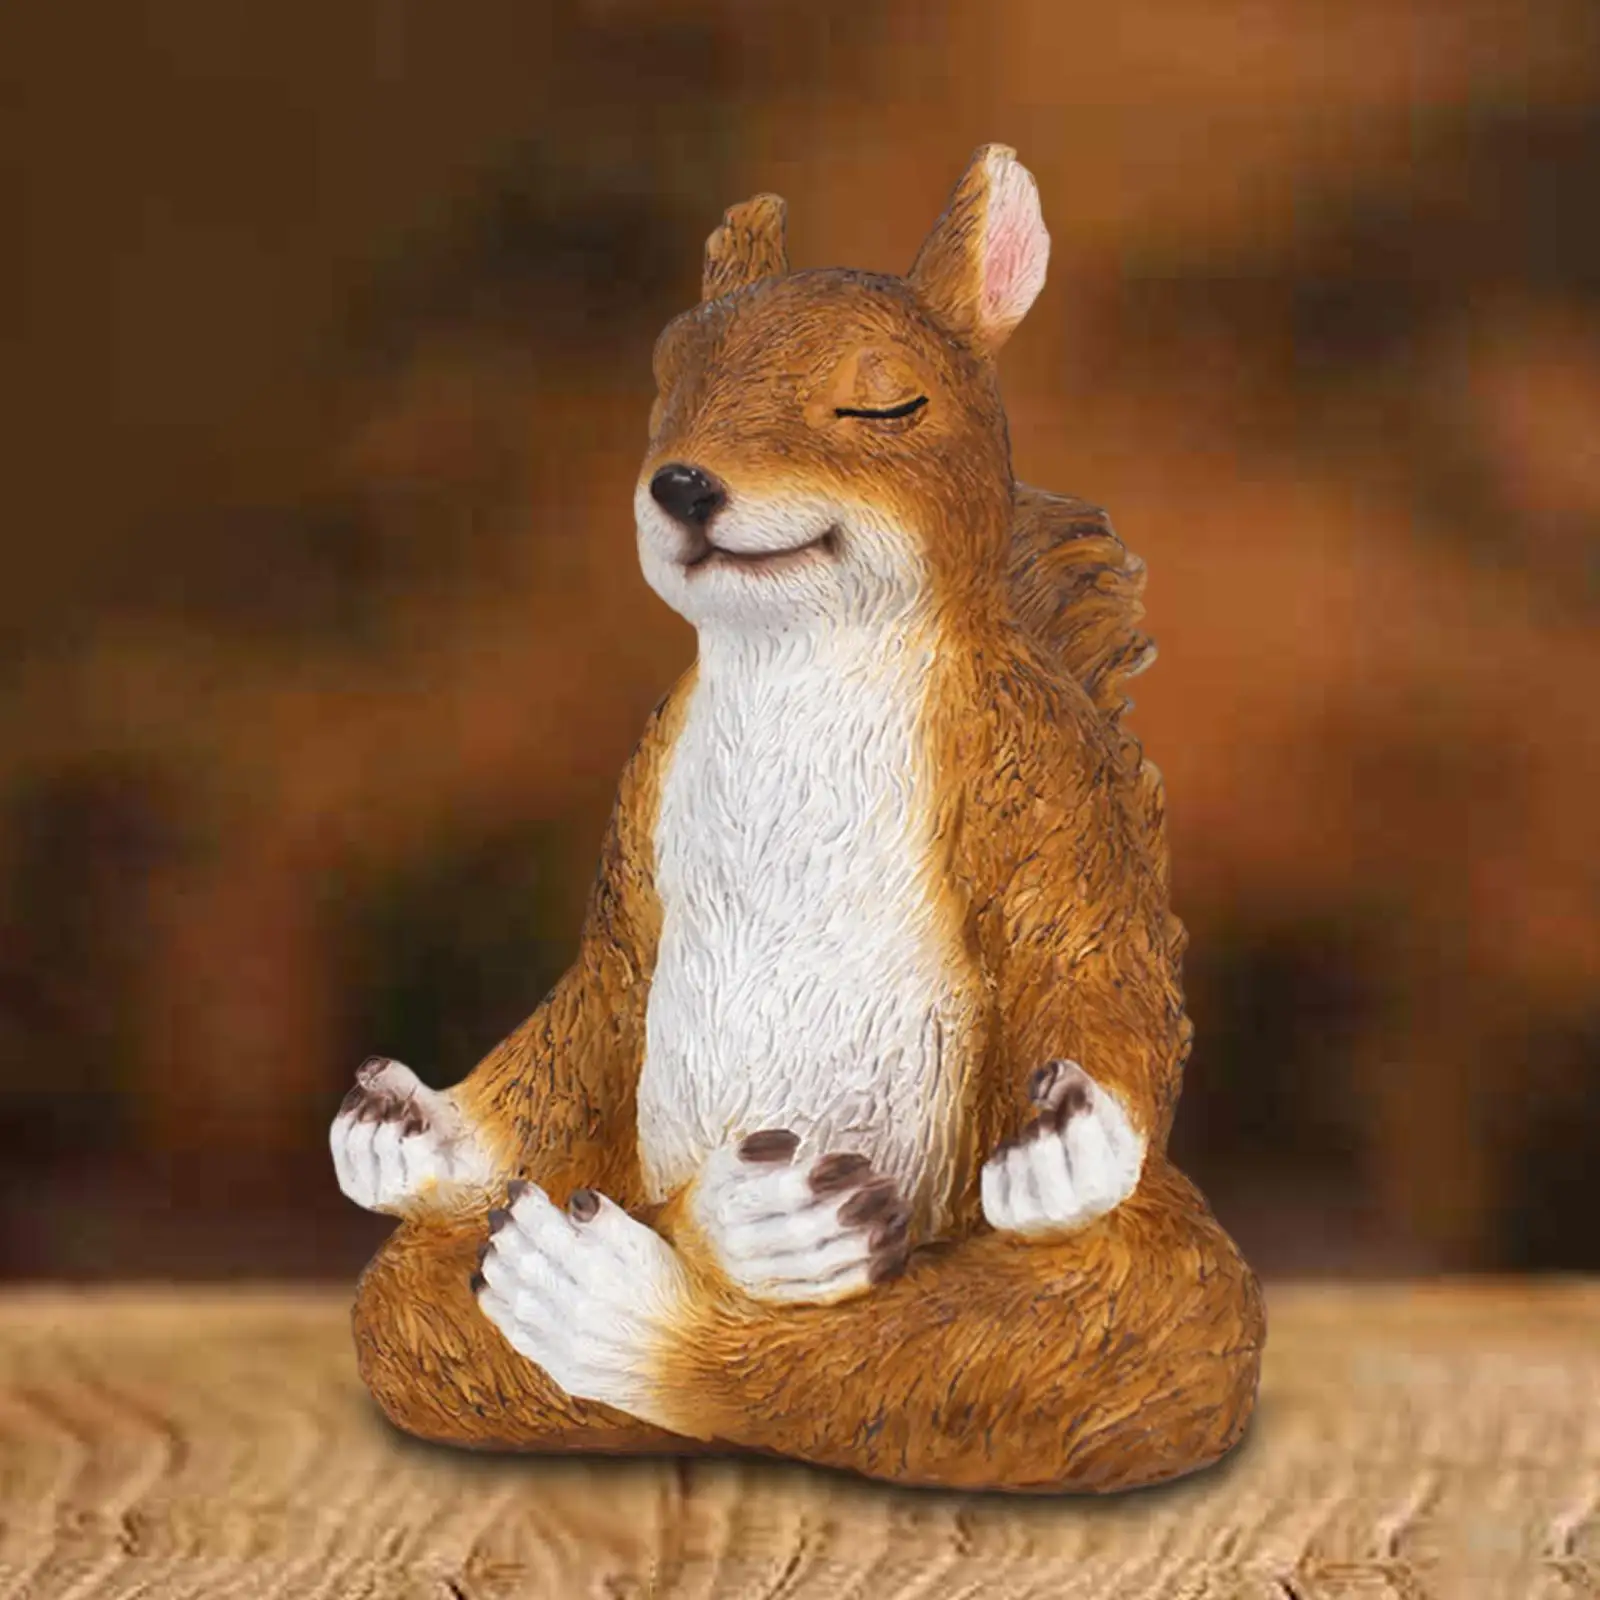 Squirrel Statue Sculptures Figurines Artware Resin Office Table Display Bar